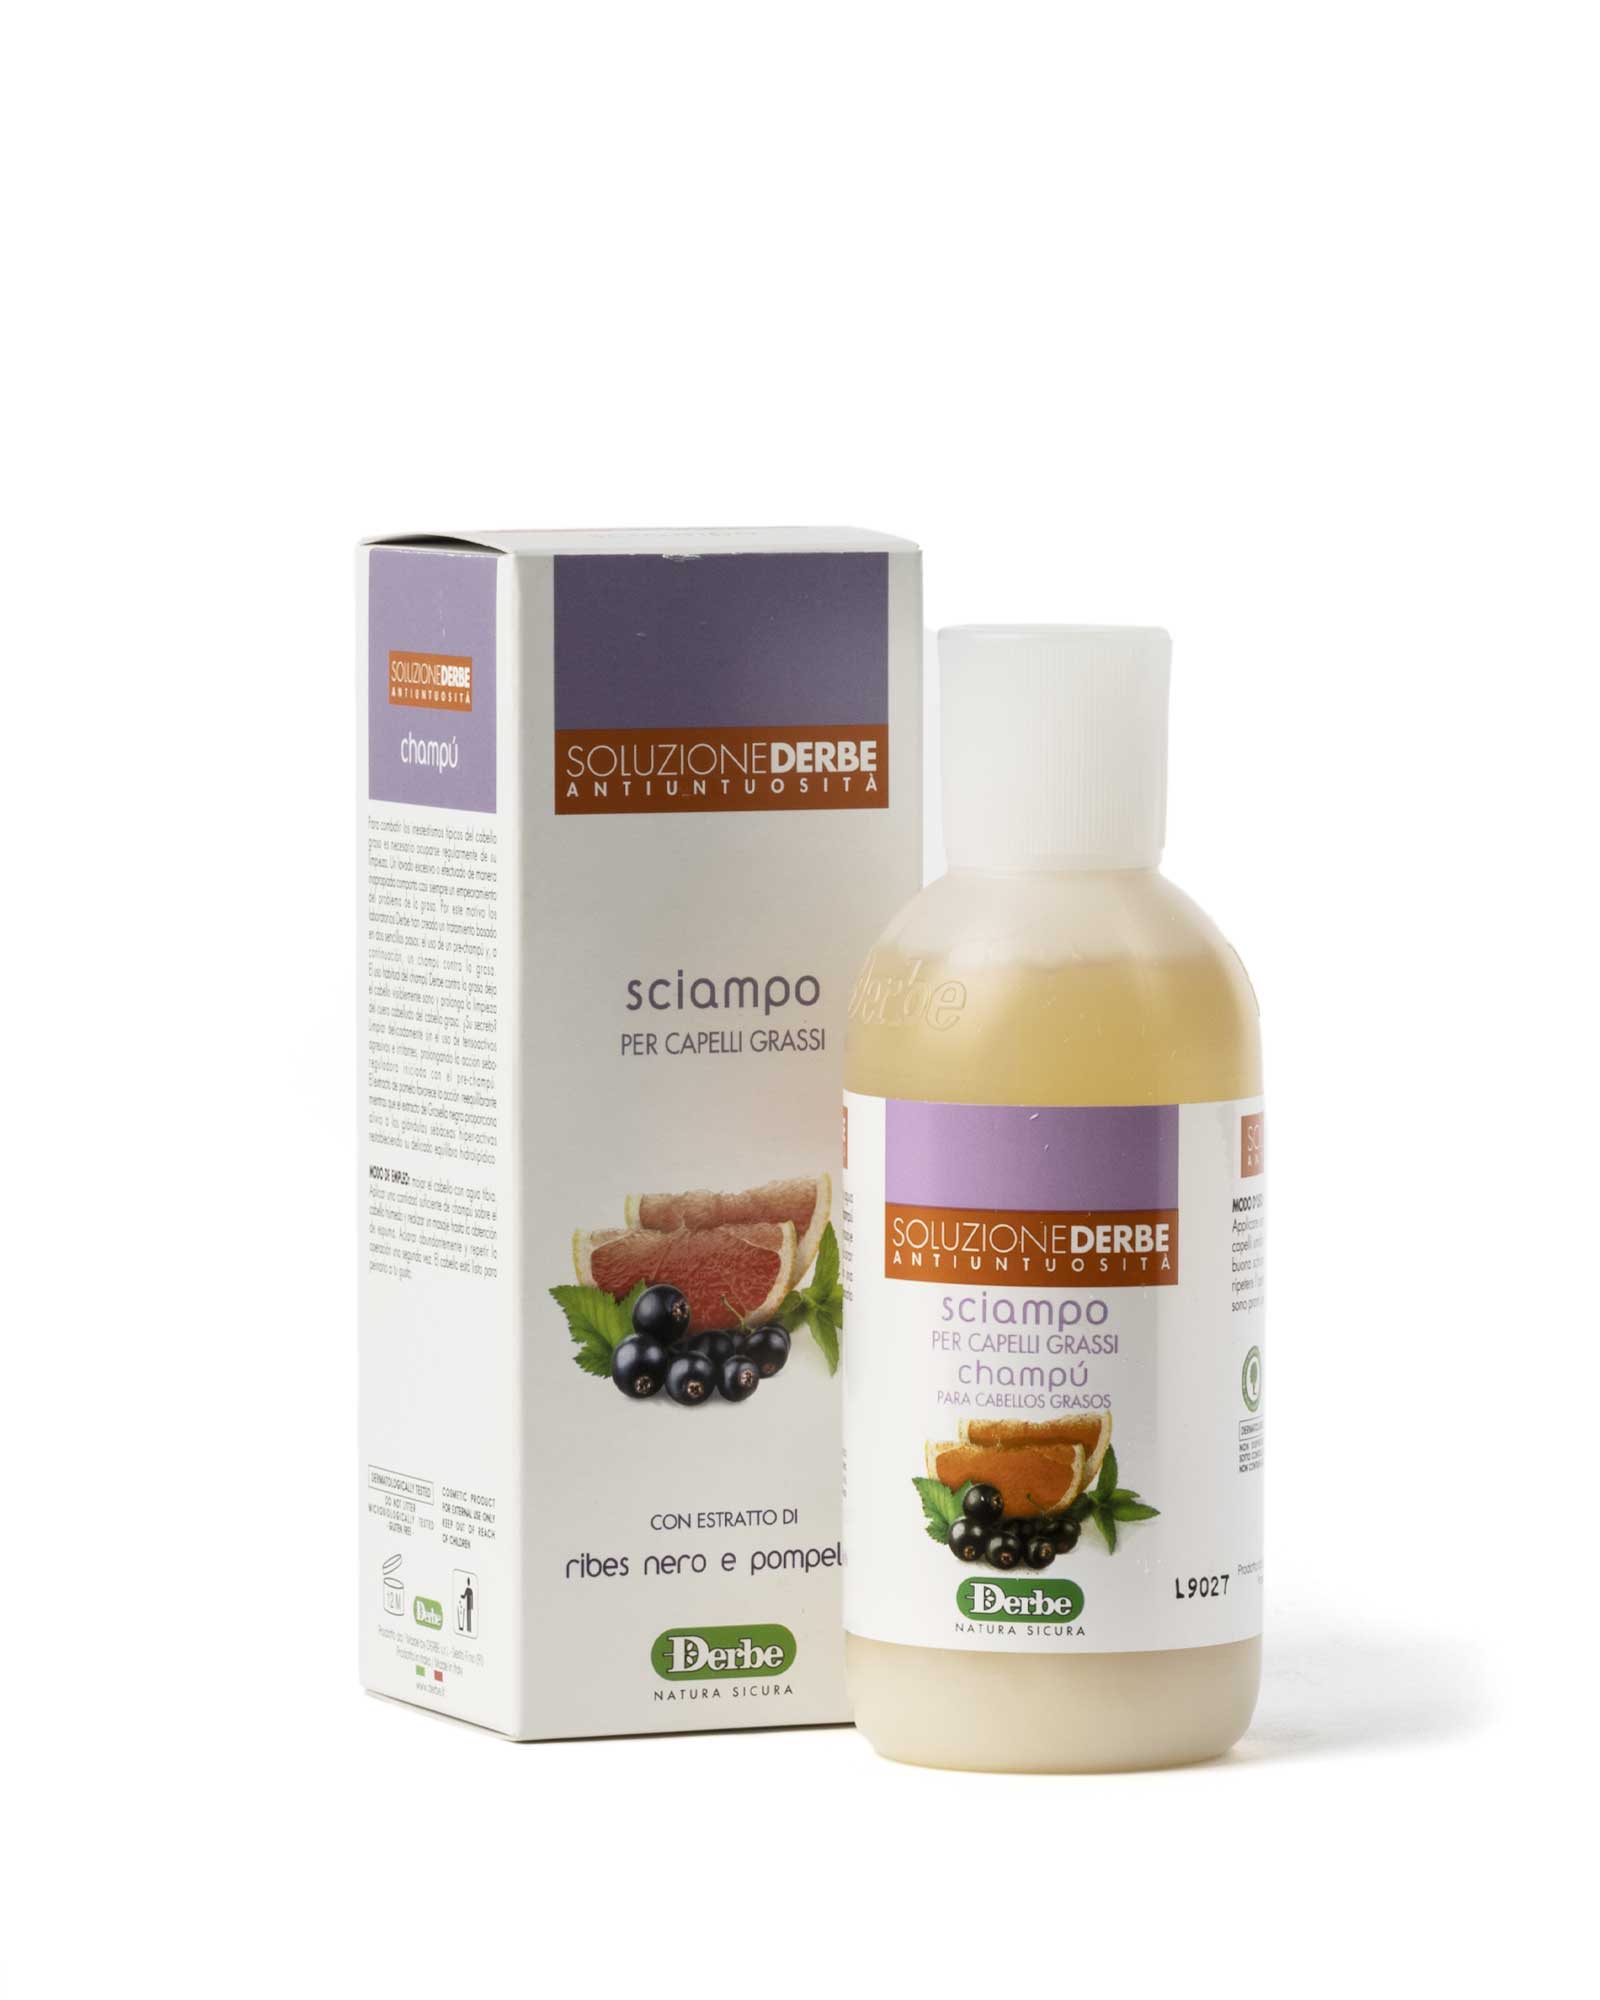 Shampoo for oily hair – Derbe